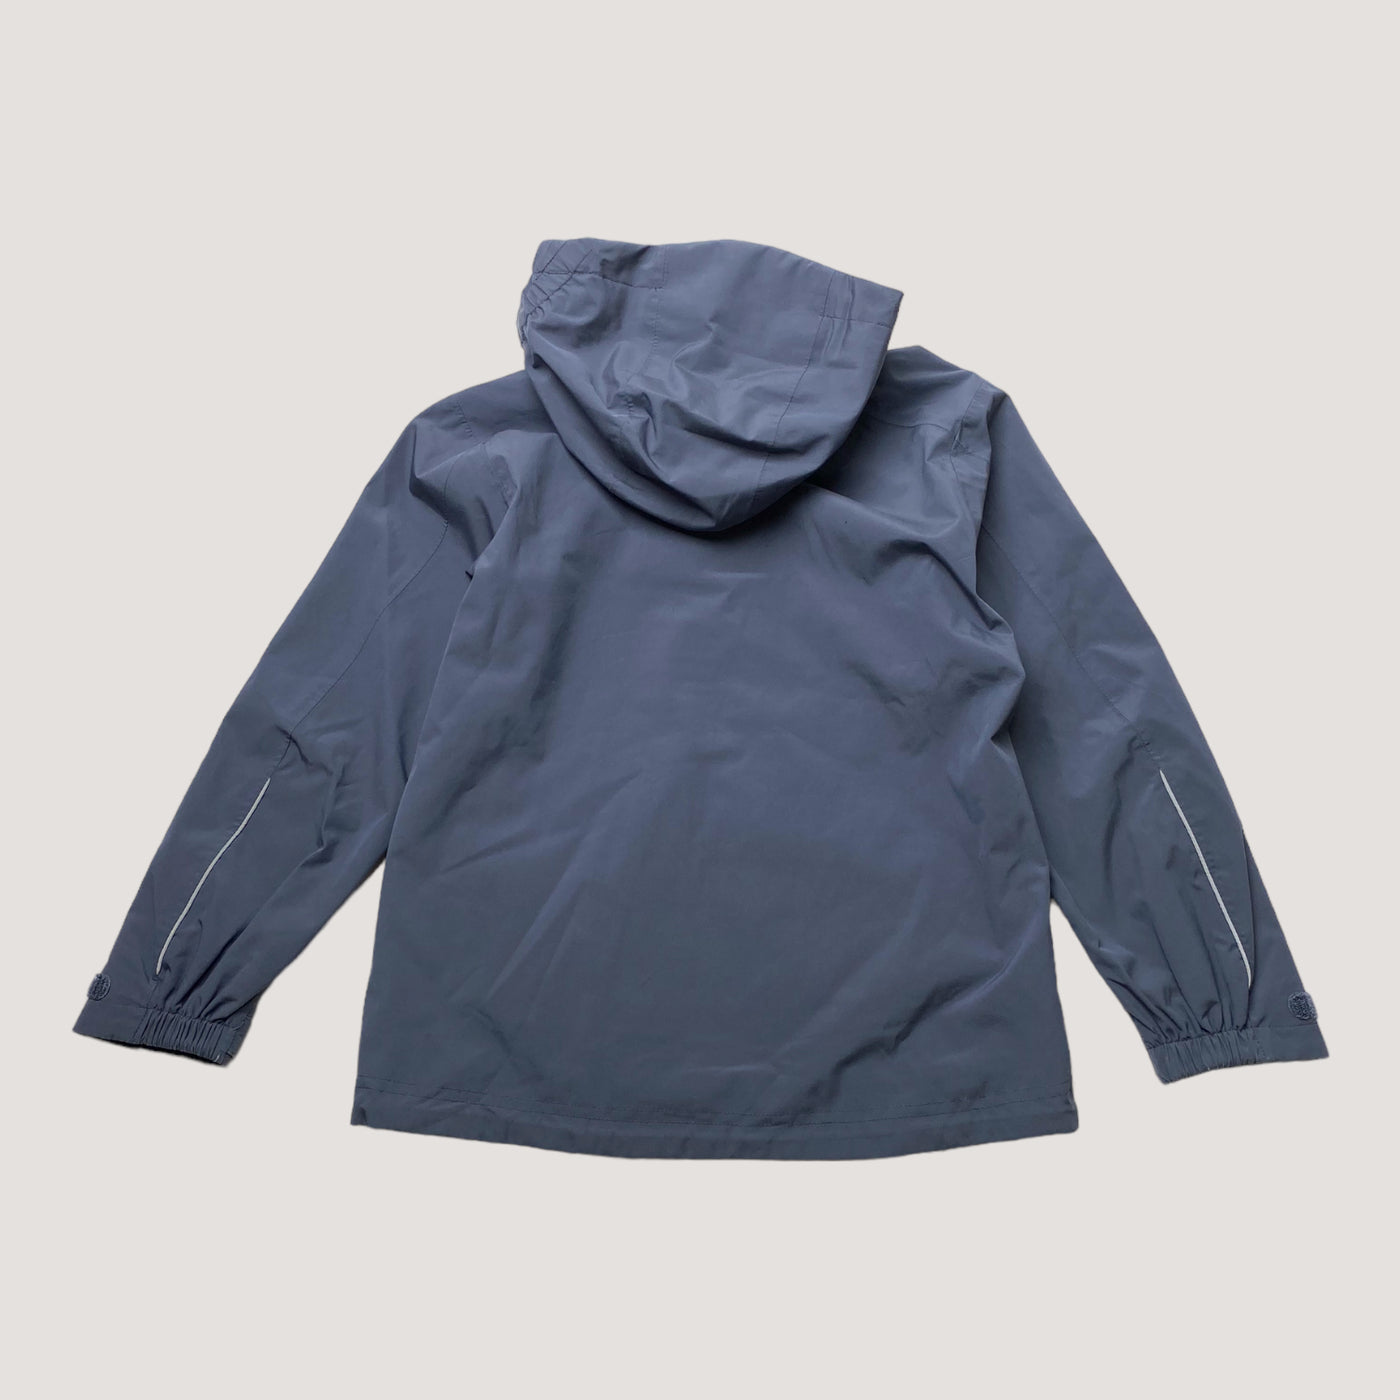 Haglöfs wind jacket, grey | 134cm